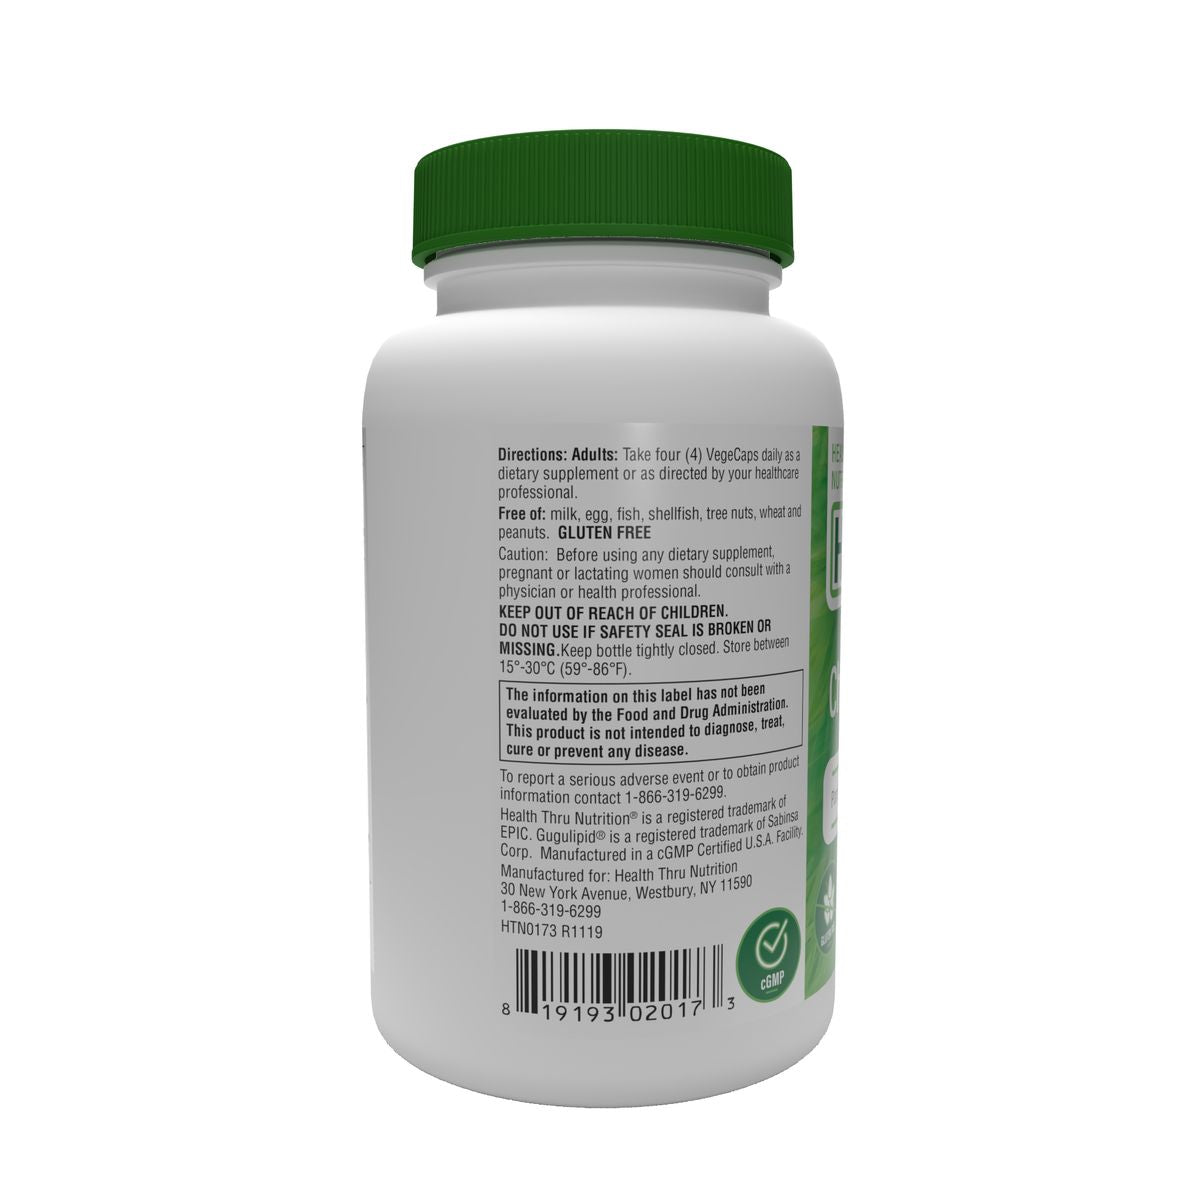 Health Thru Nutrition Advanced Cholesterol Complex (Plant Phytosterols, Policosanol & Gugulipid) 800mg 120 Vegecaps